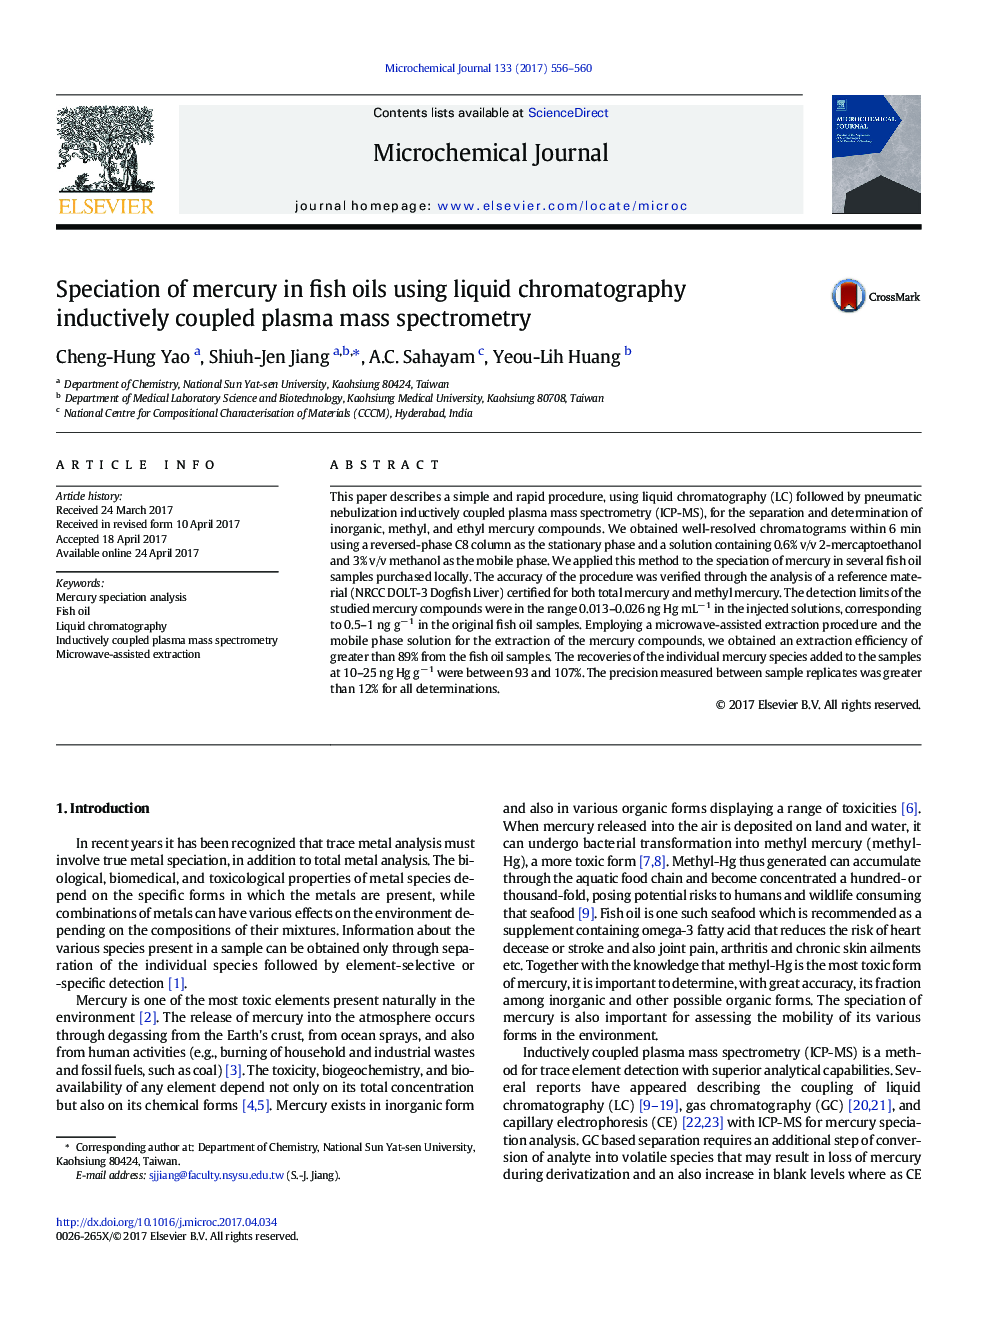 Speciation of mercury in fish oils using liquid chromatography inductively coupled plasma mass spectrometry